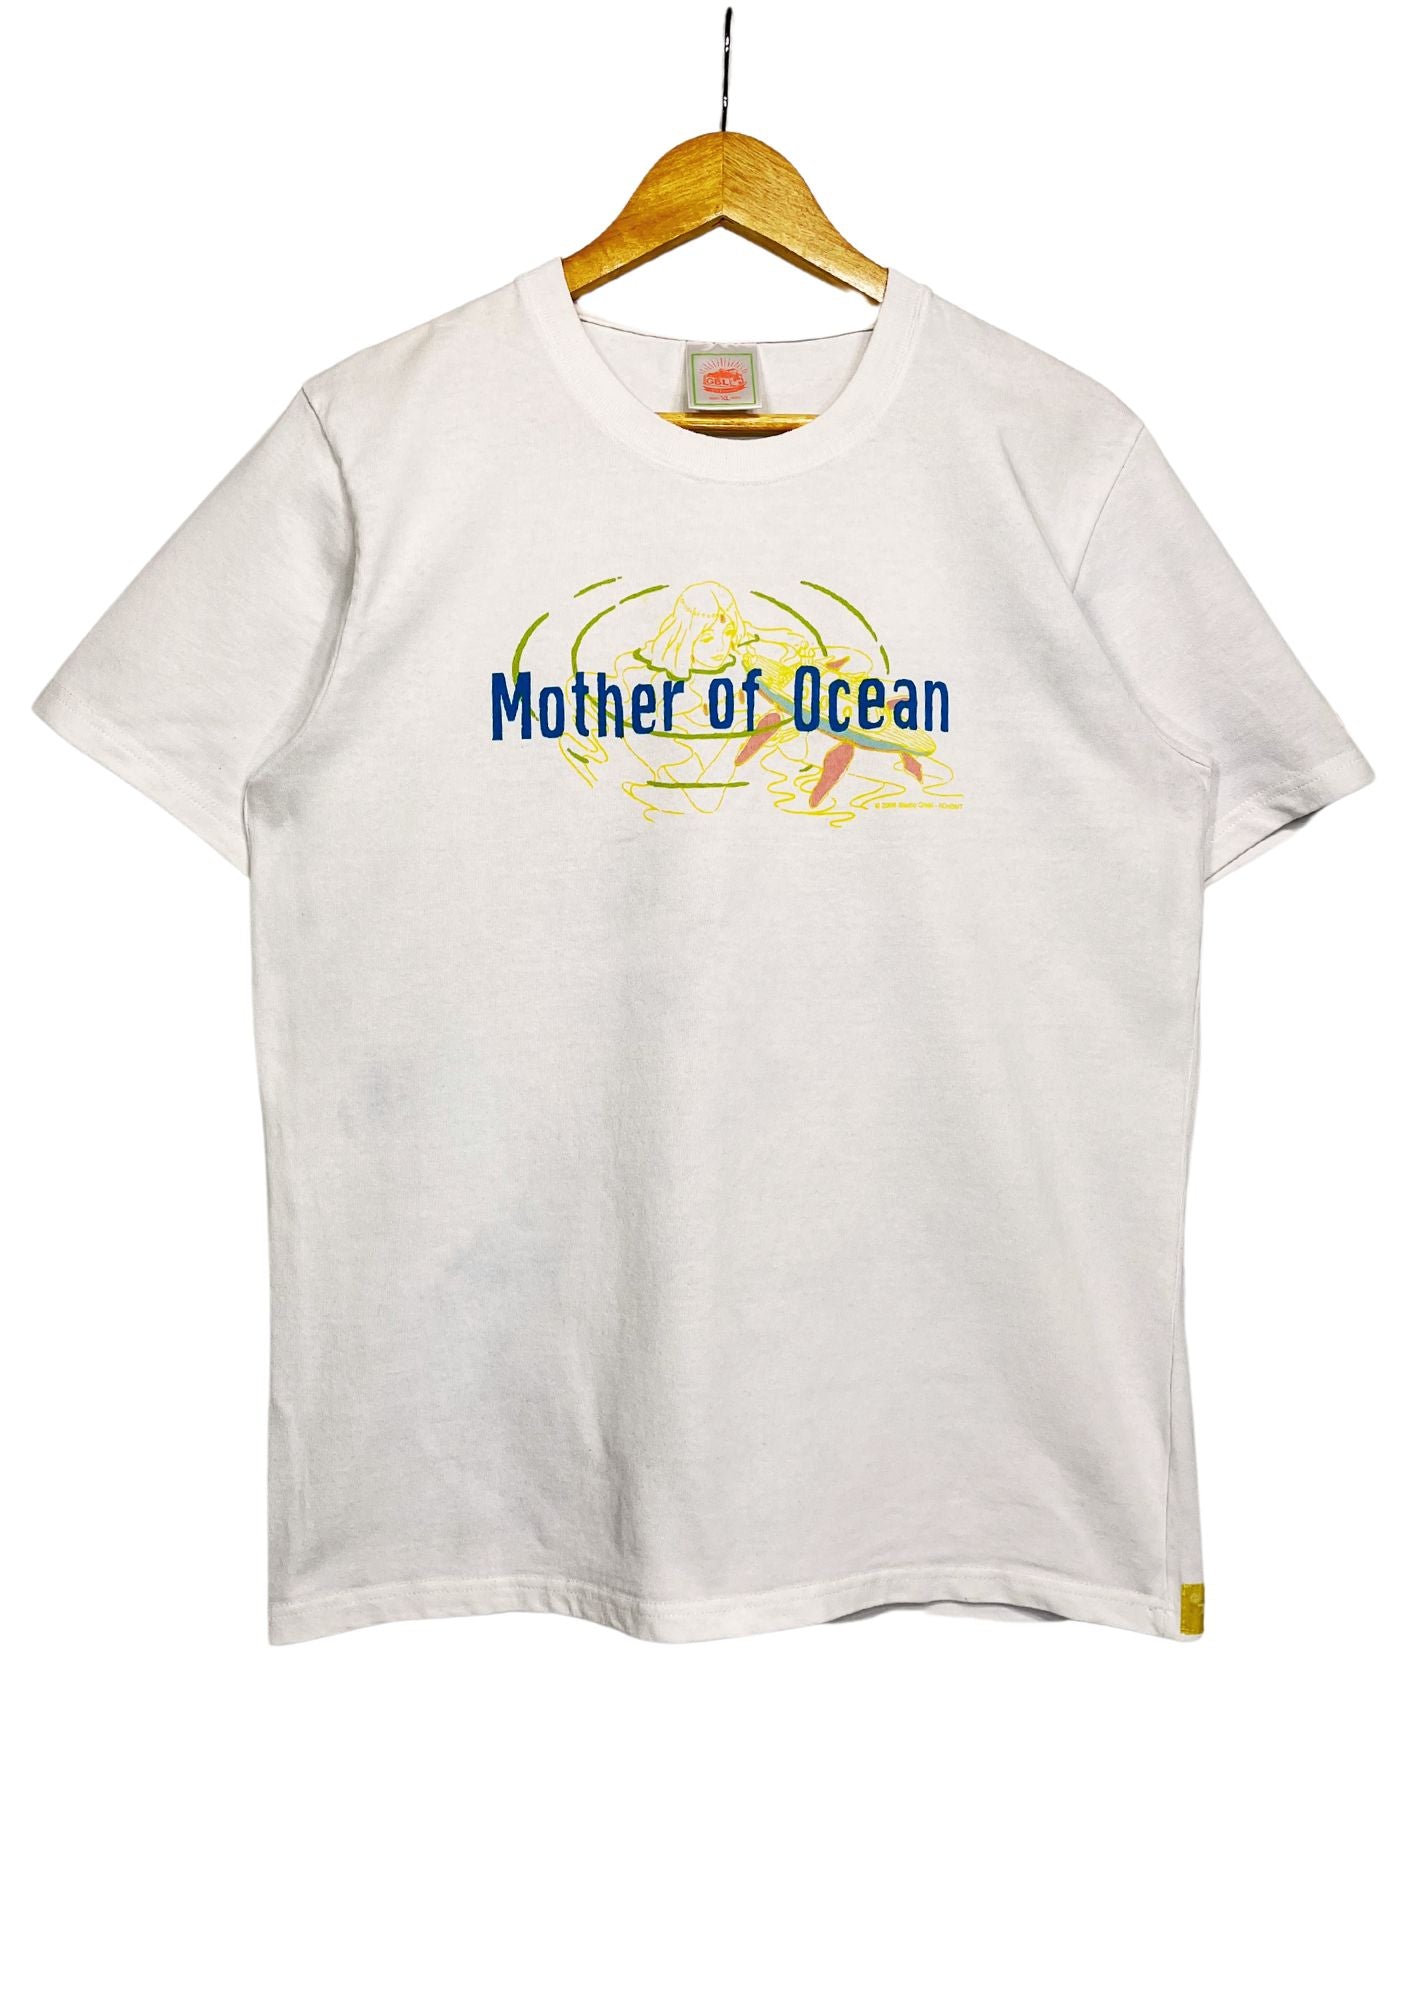 Ponyo x GBL Mother of Ocean T-shirt